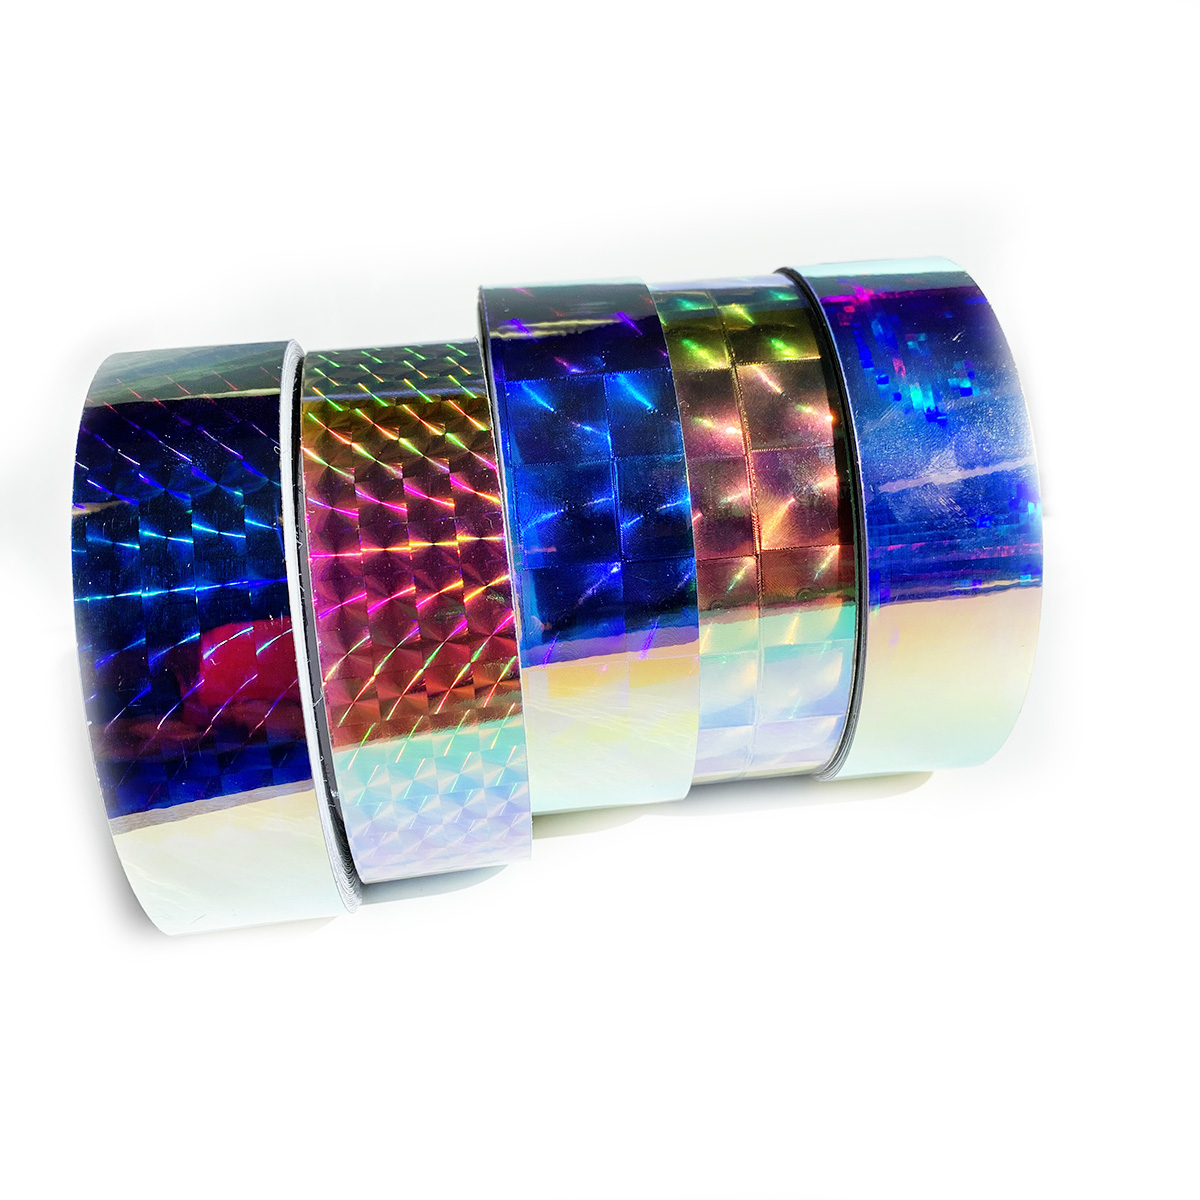 Fire Opal Holographic Tape Collection 5 color bundle - Caribbean